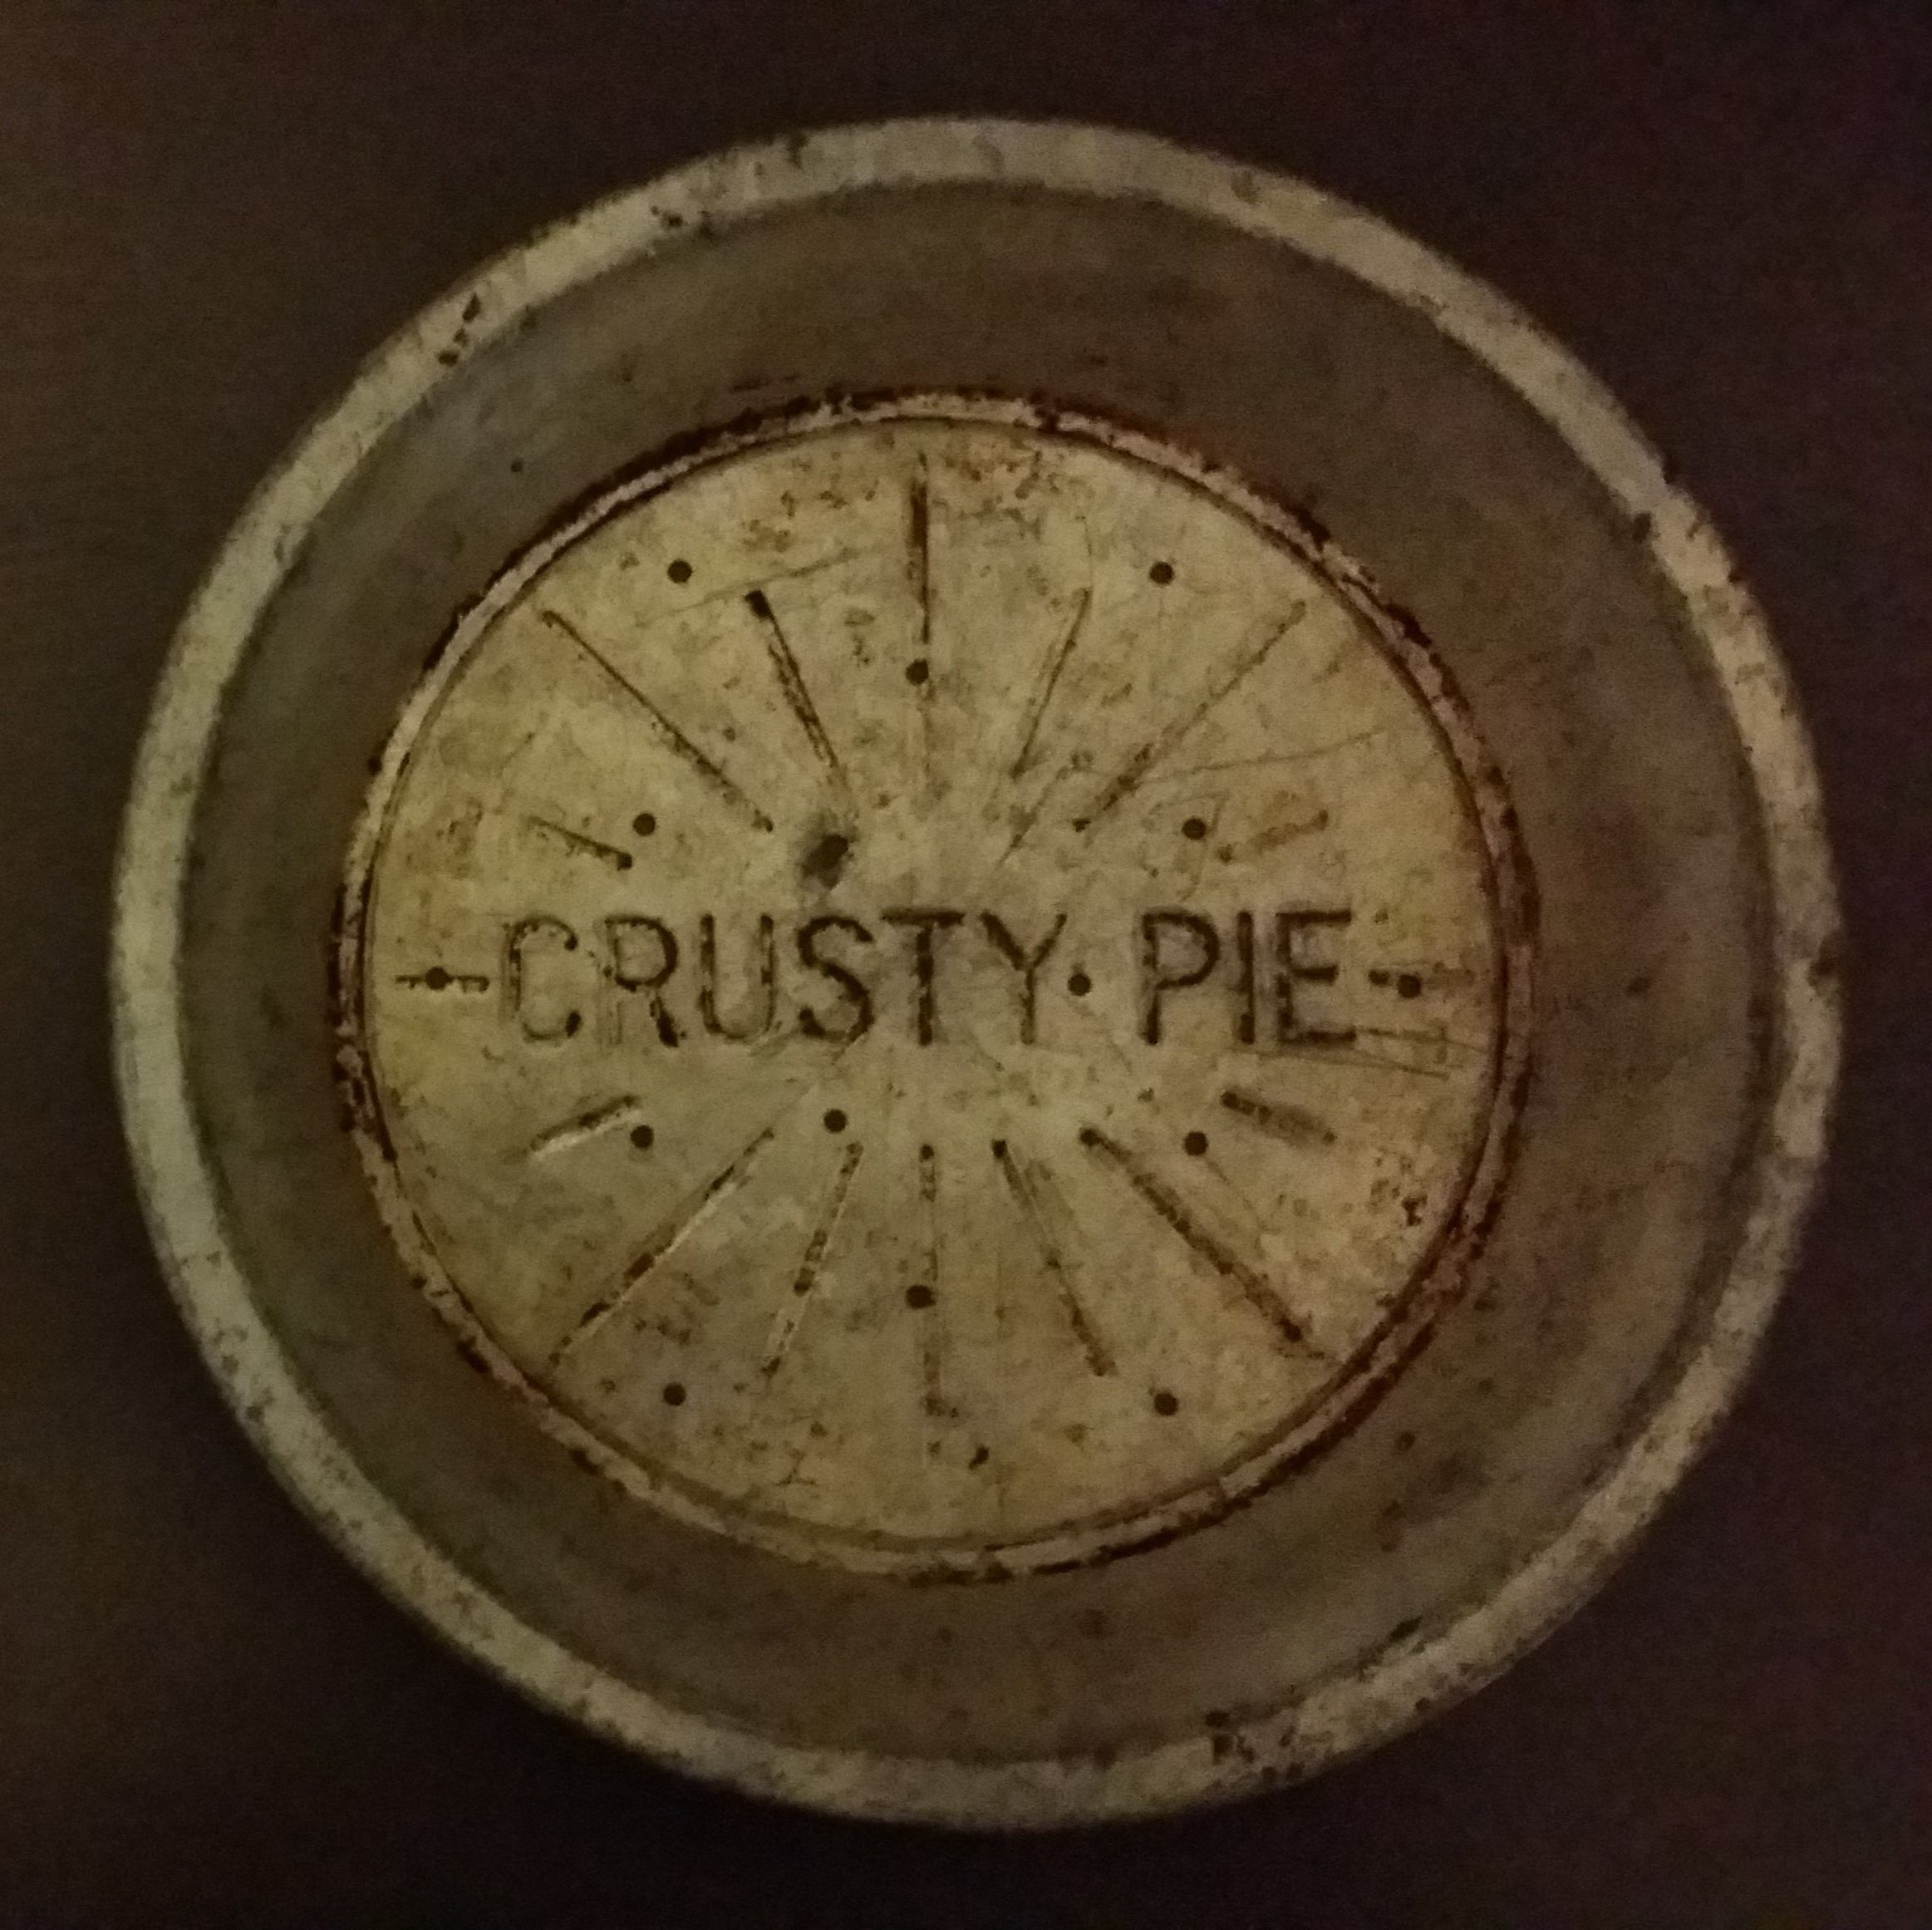 Crusty Pie